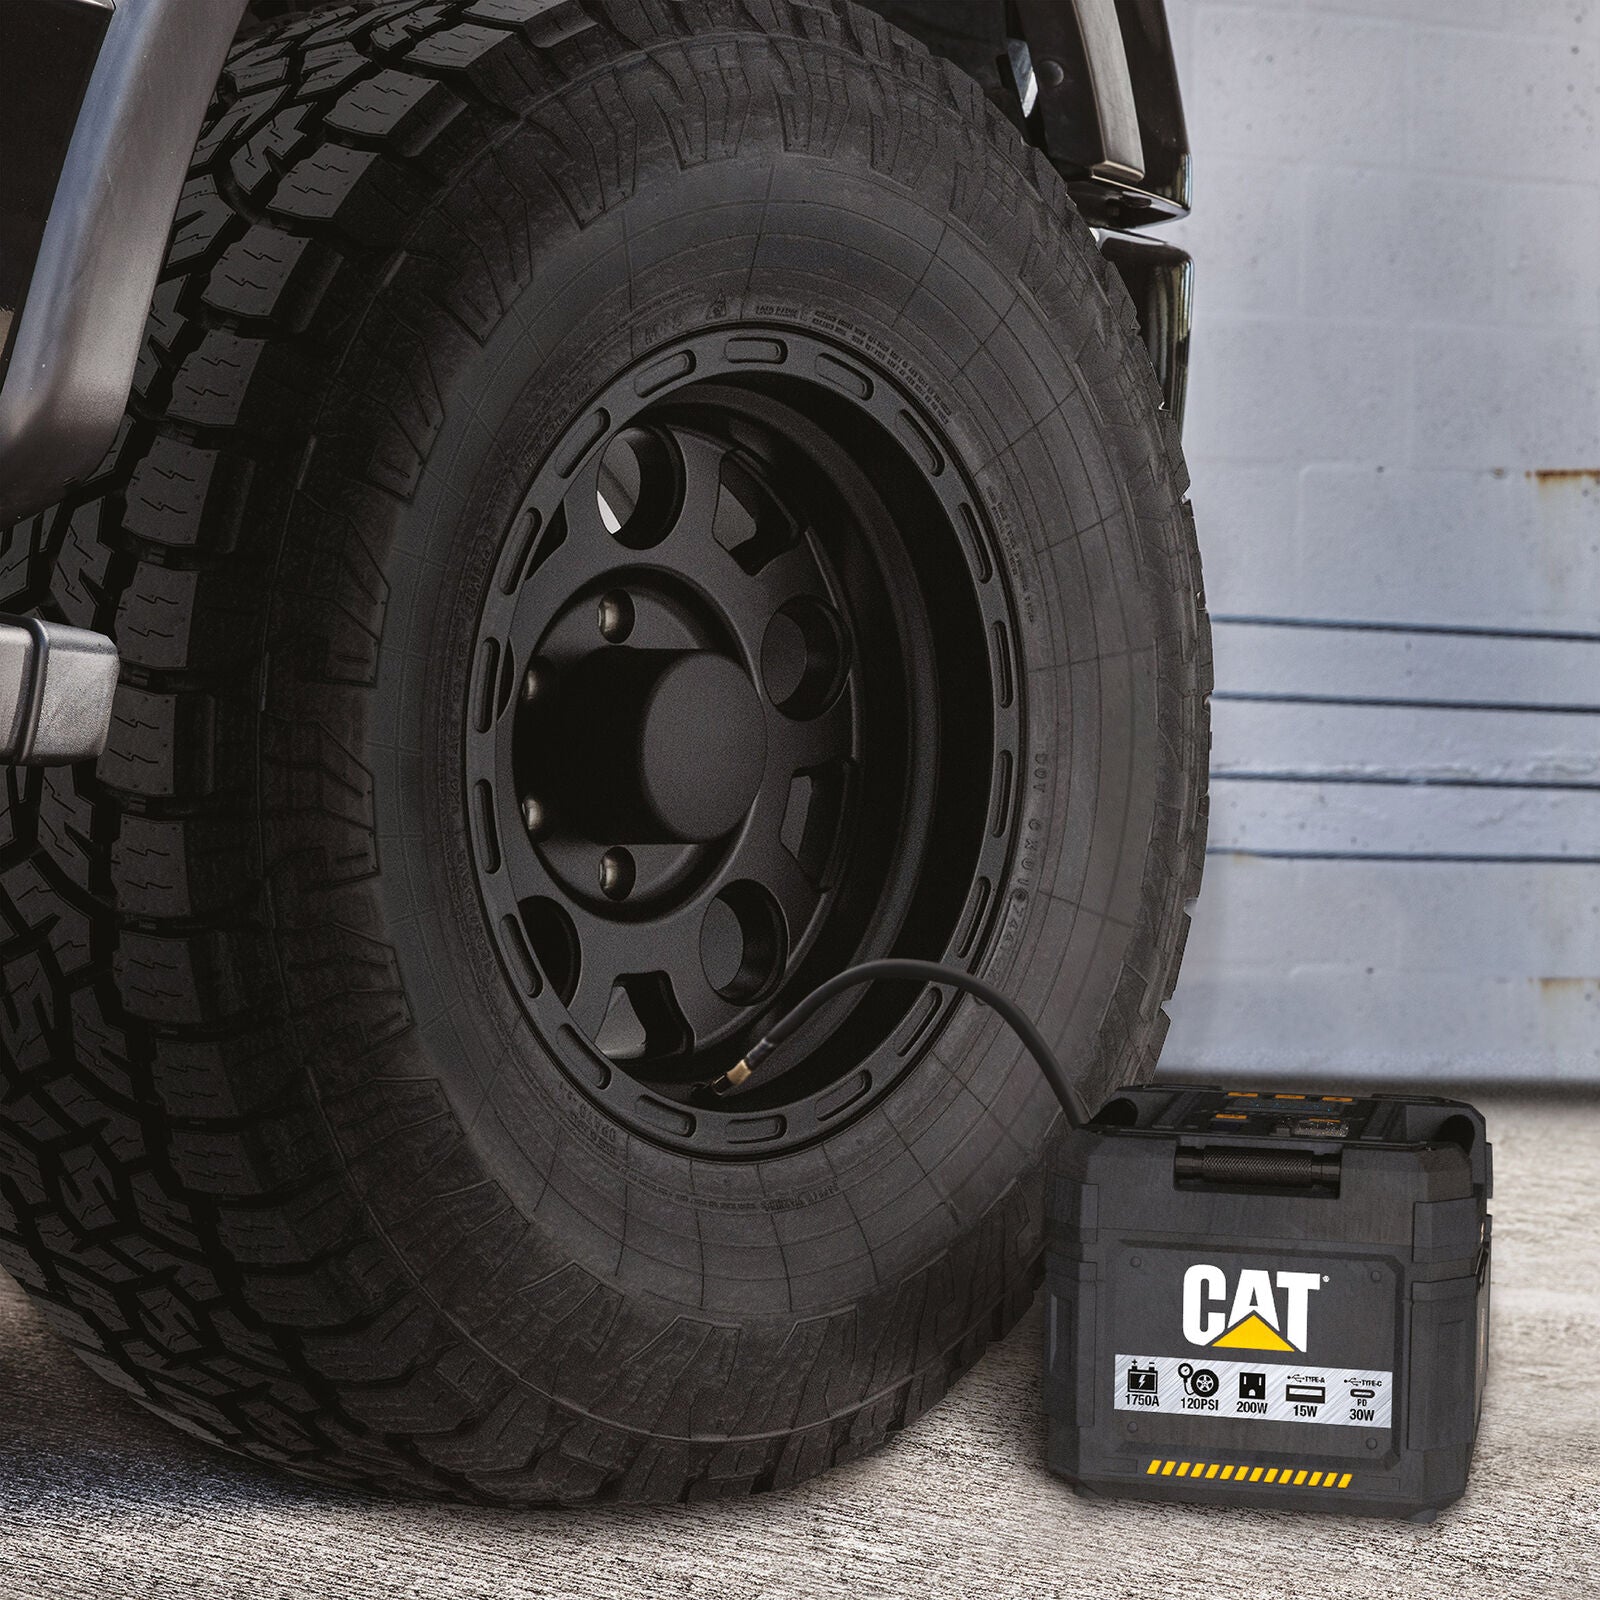 CAT Cube Auto Car Battery Jump Starter, Air Compressor, Portable, 1750 Amp  NEW